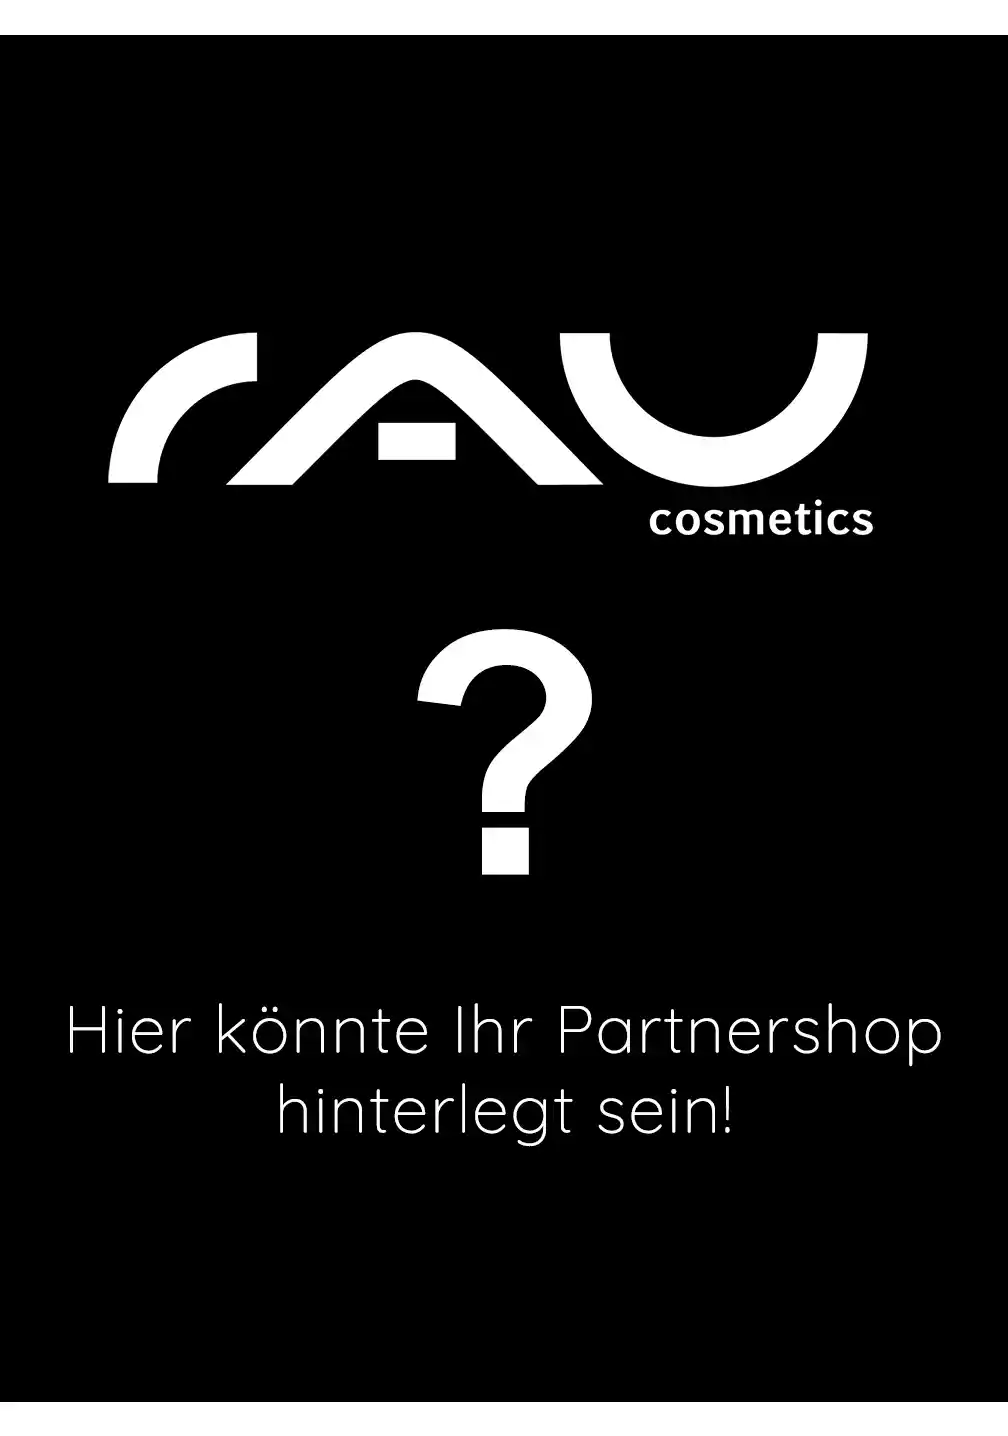 RAU_Cosmetics-Partnershops01